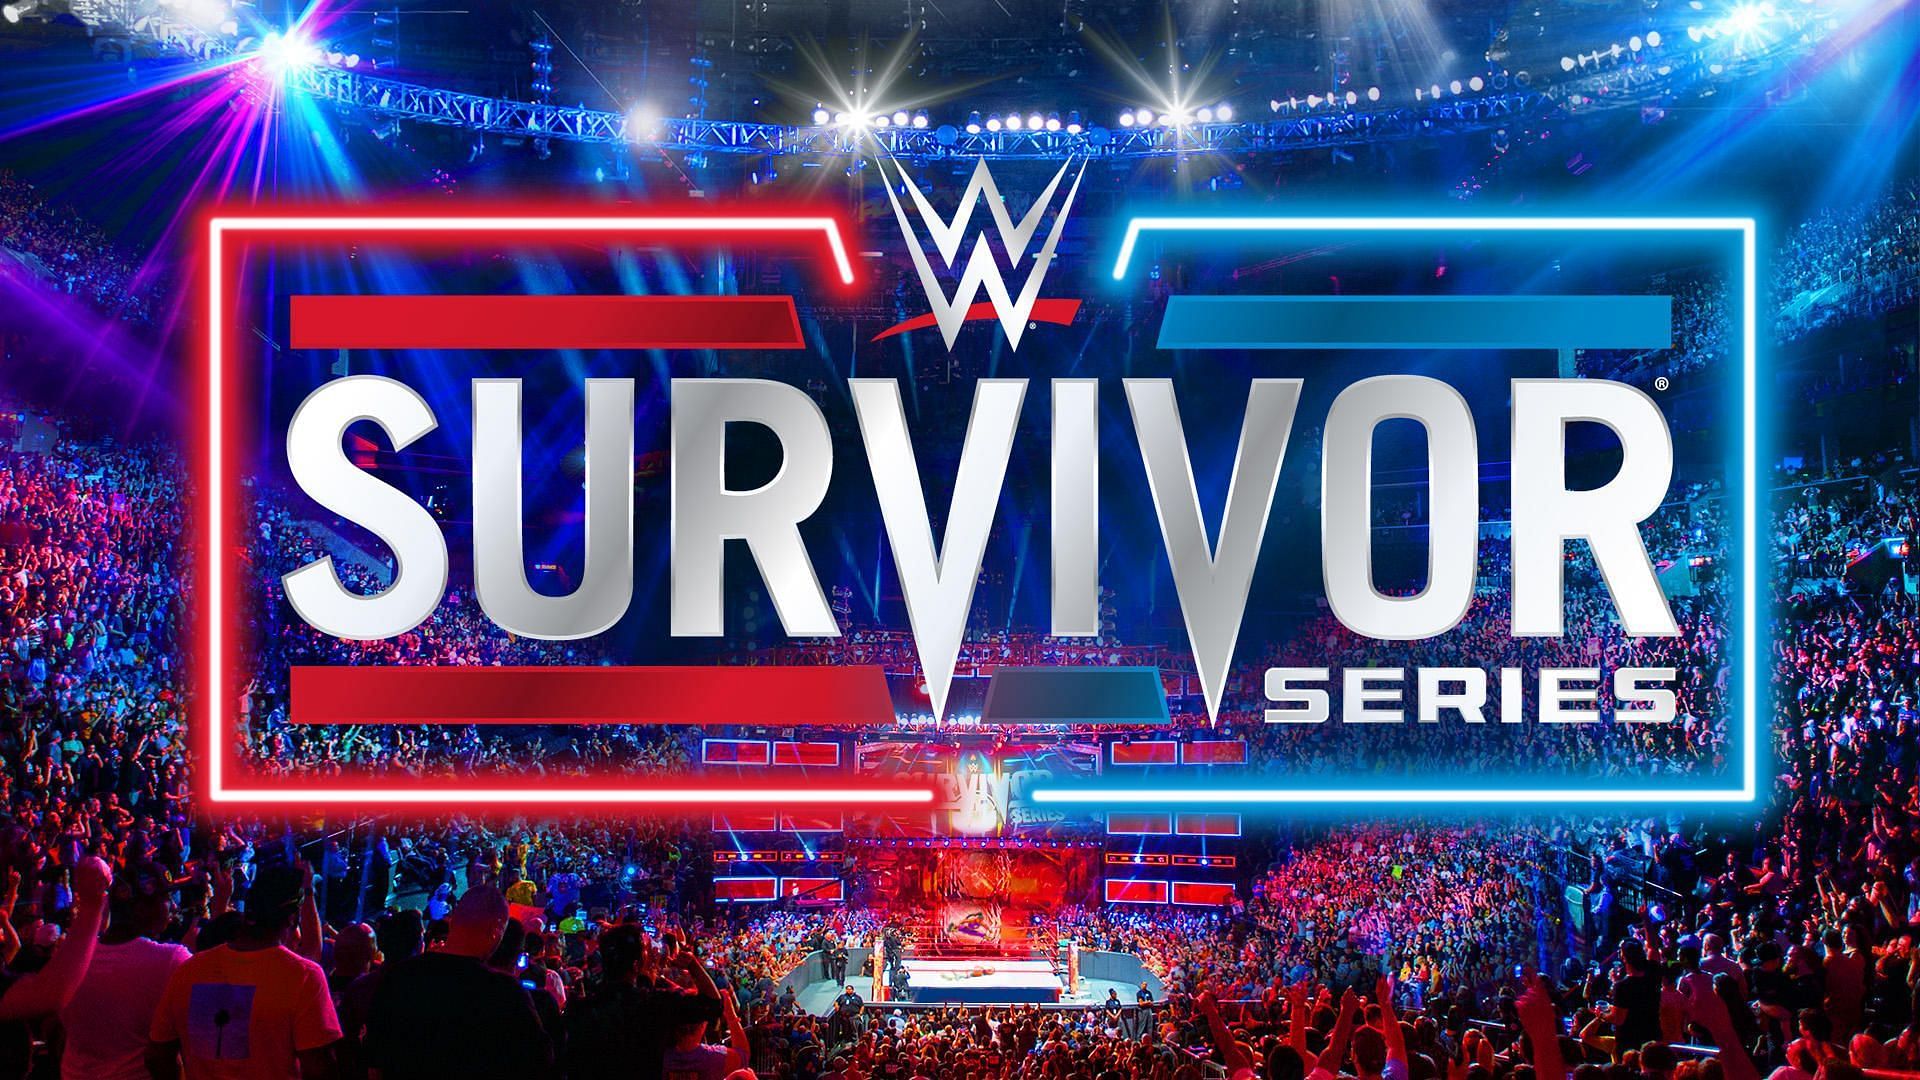 WWE Survivor Series will air live this Saturday